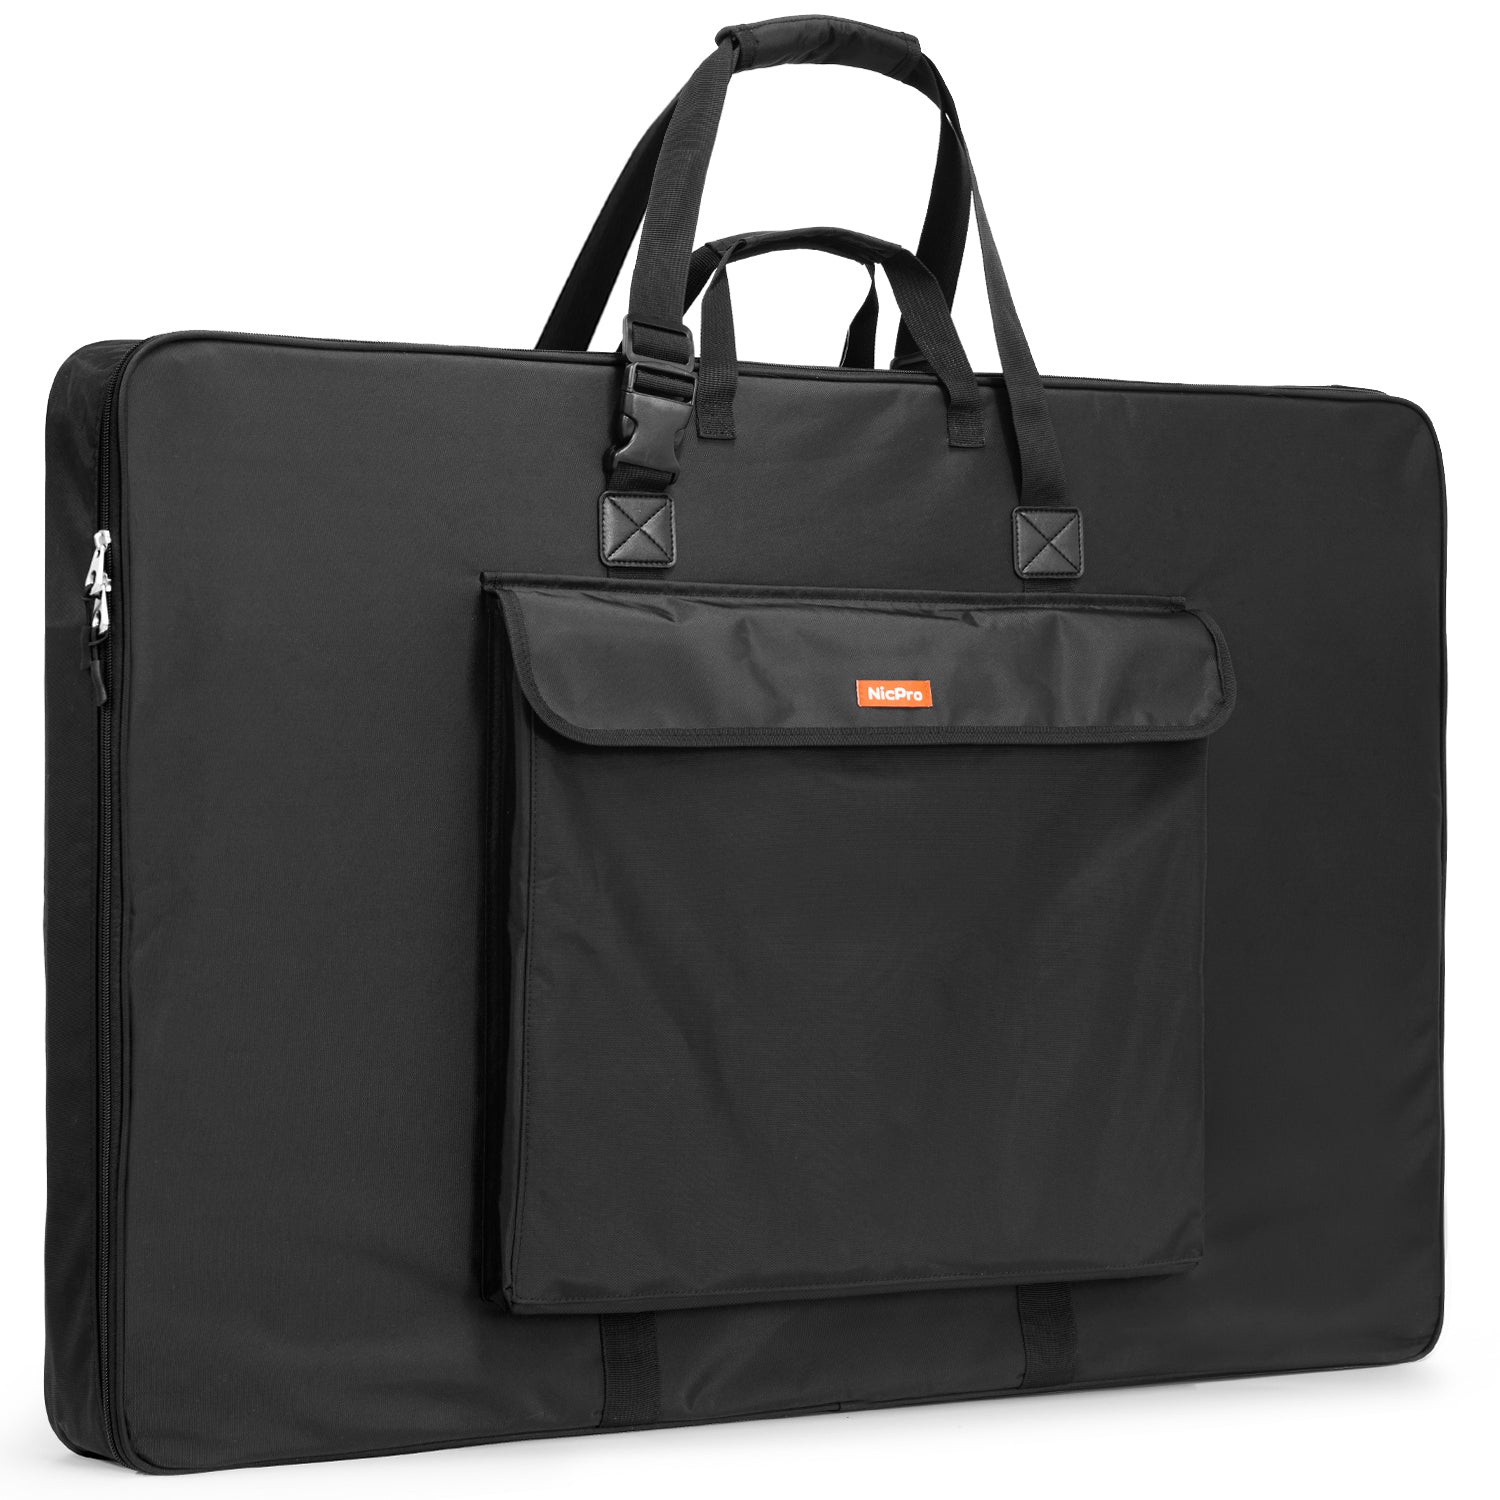 LOKATSE Home 28 x 20.5 Inches Large Art Portfolio Bag Artist Carrying Case with Shoulder Strap, Black